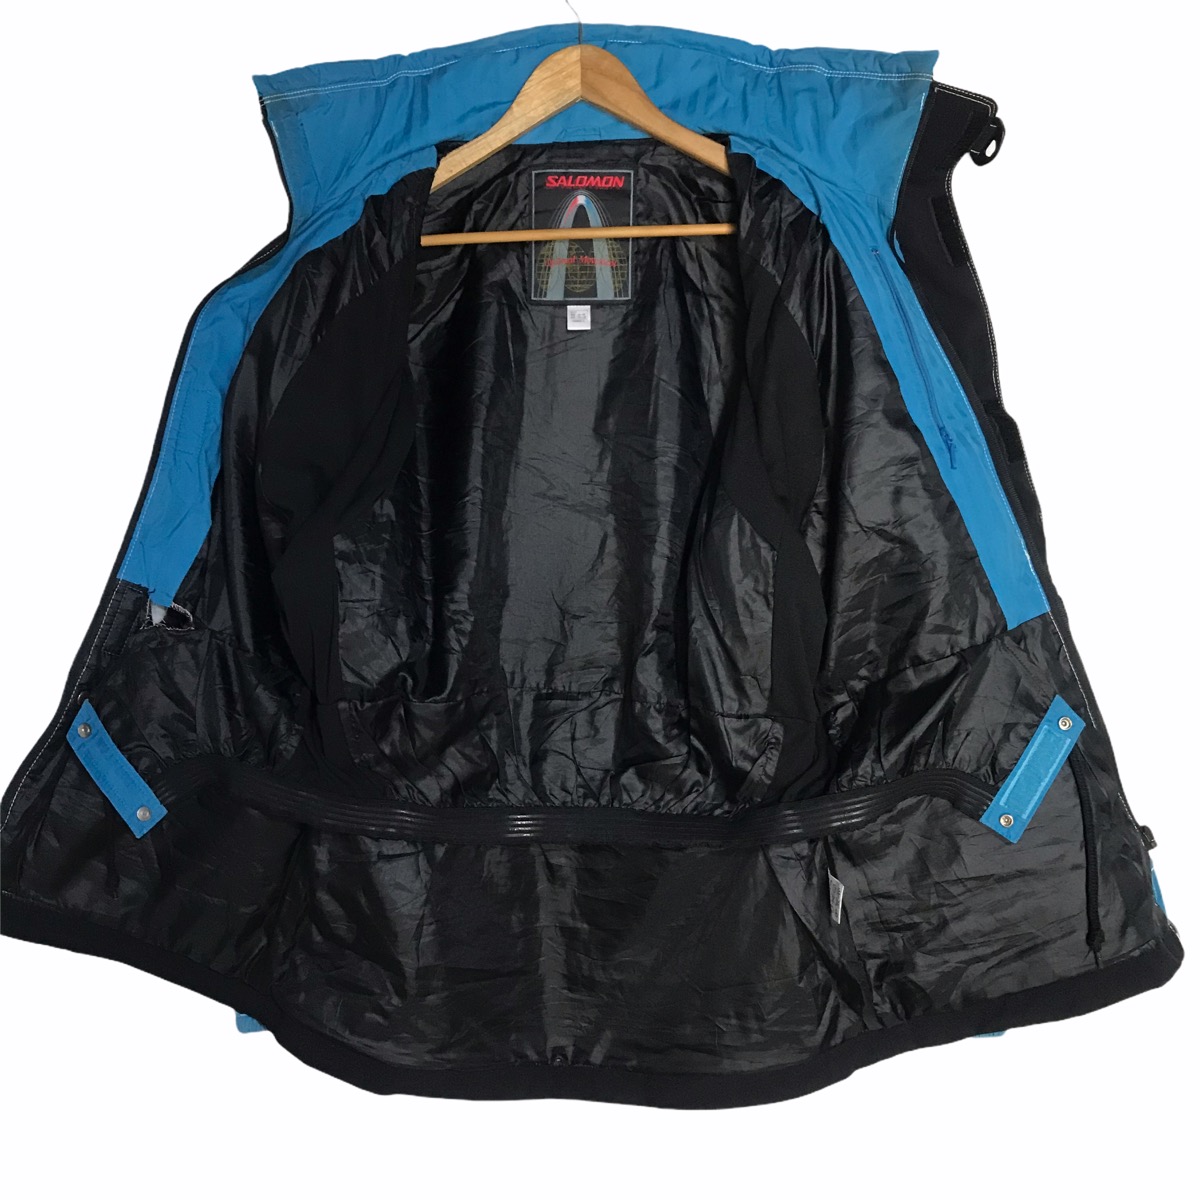 Salomon dyna monus kevlar fabric ski jacket - 2